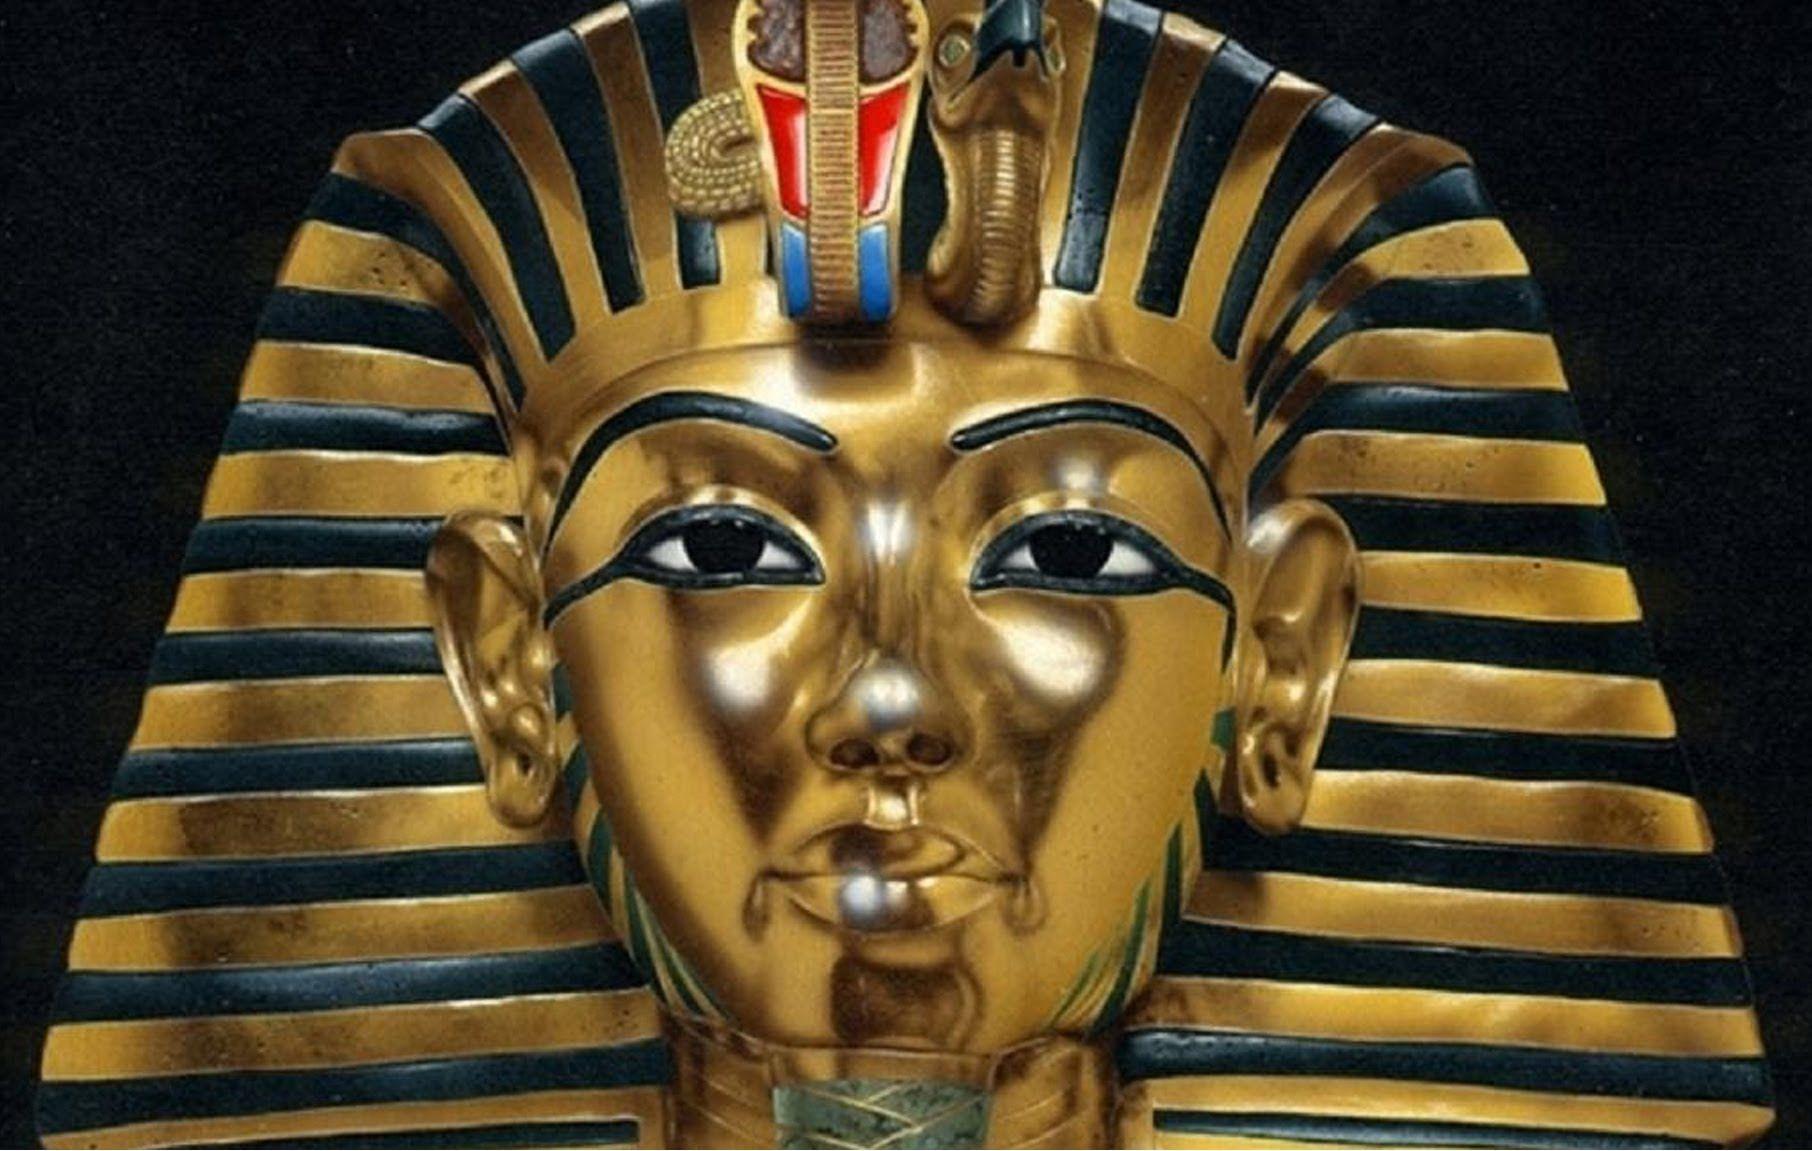 King Tut REAL TRUTH SECRET ANCIENT EGYPT HISTORY DOCUMENTARY